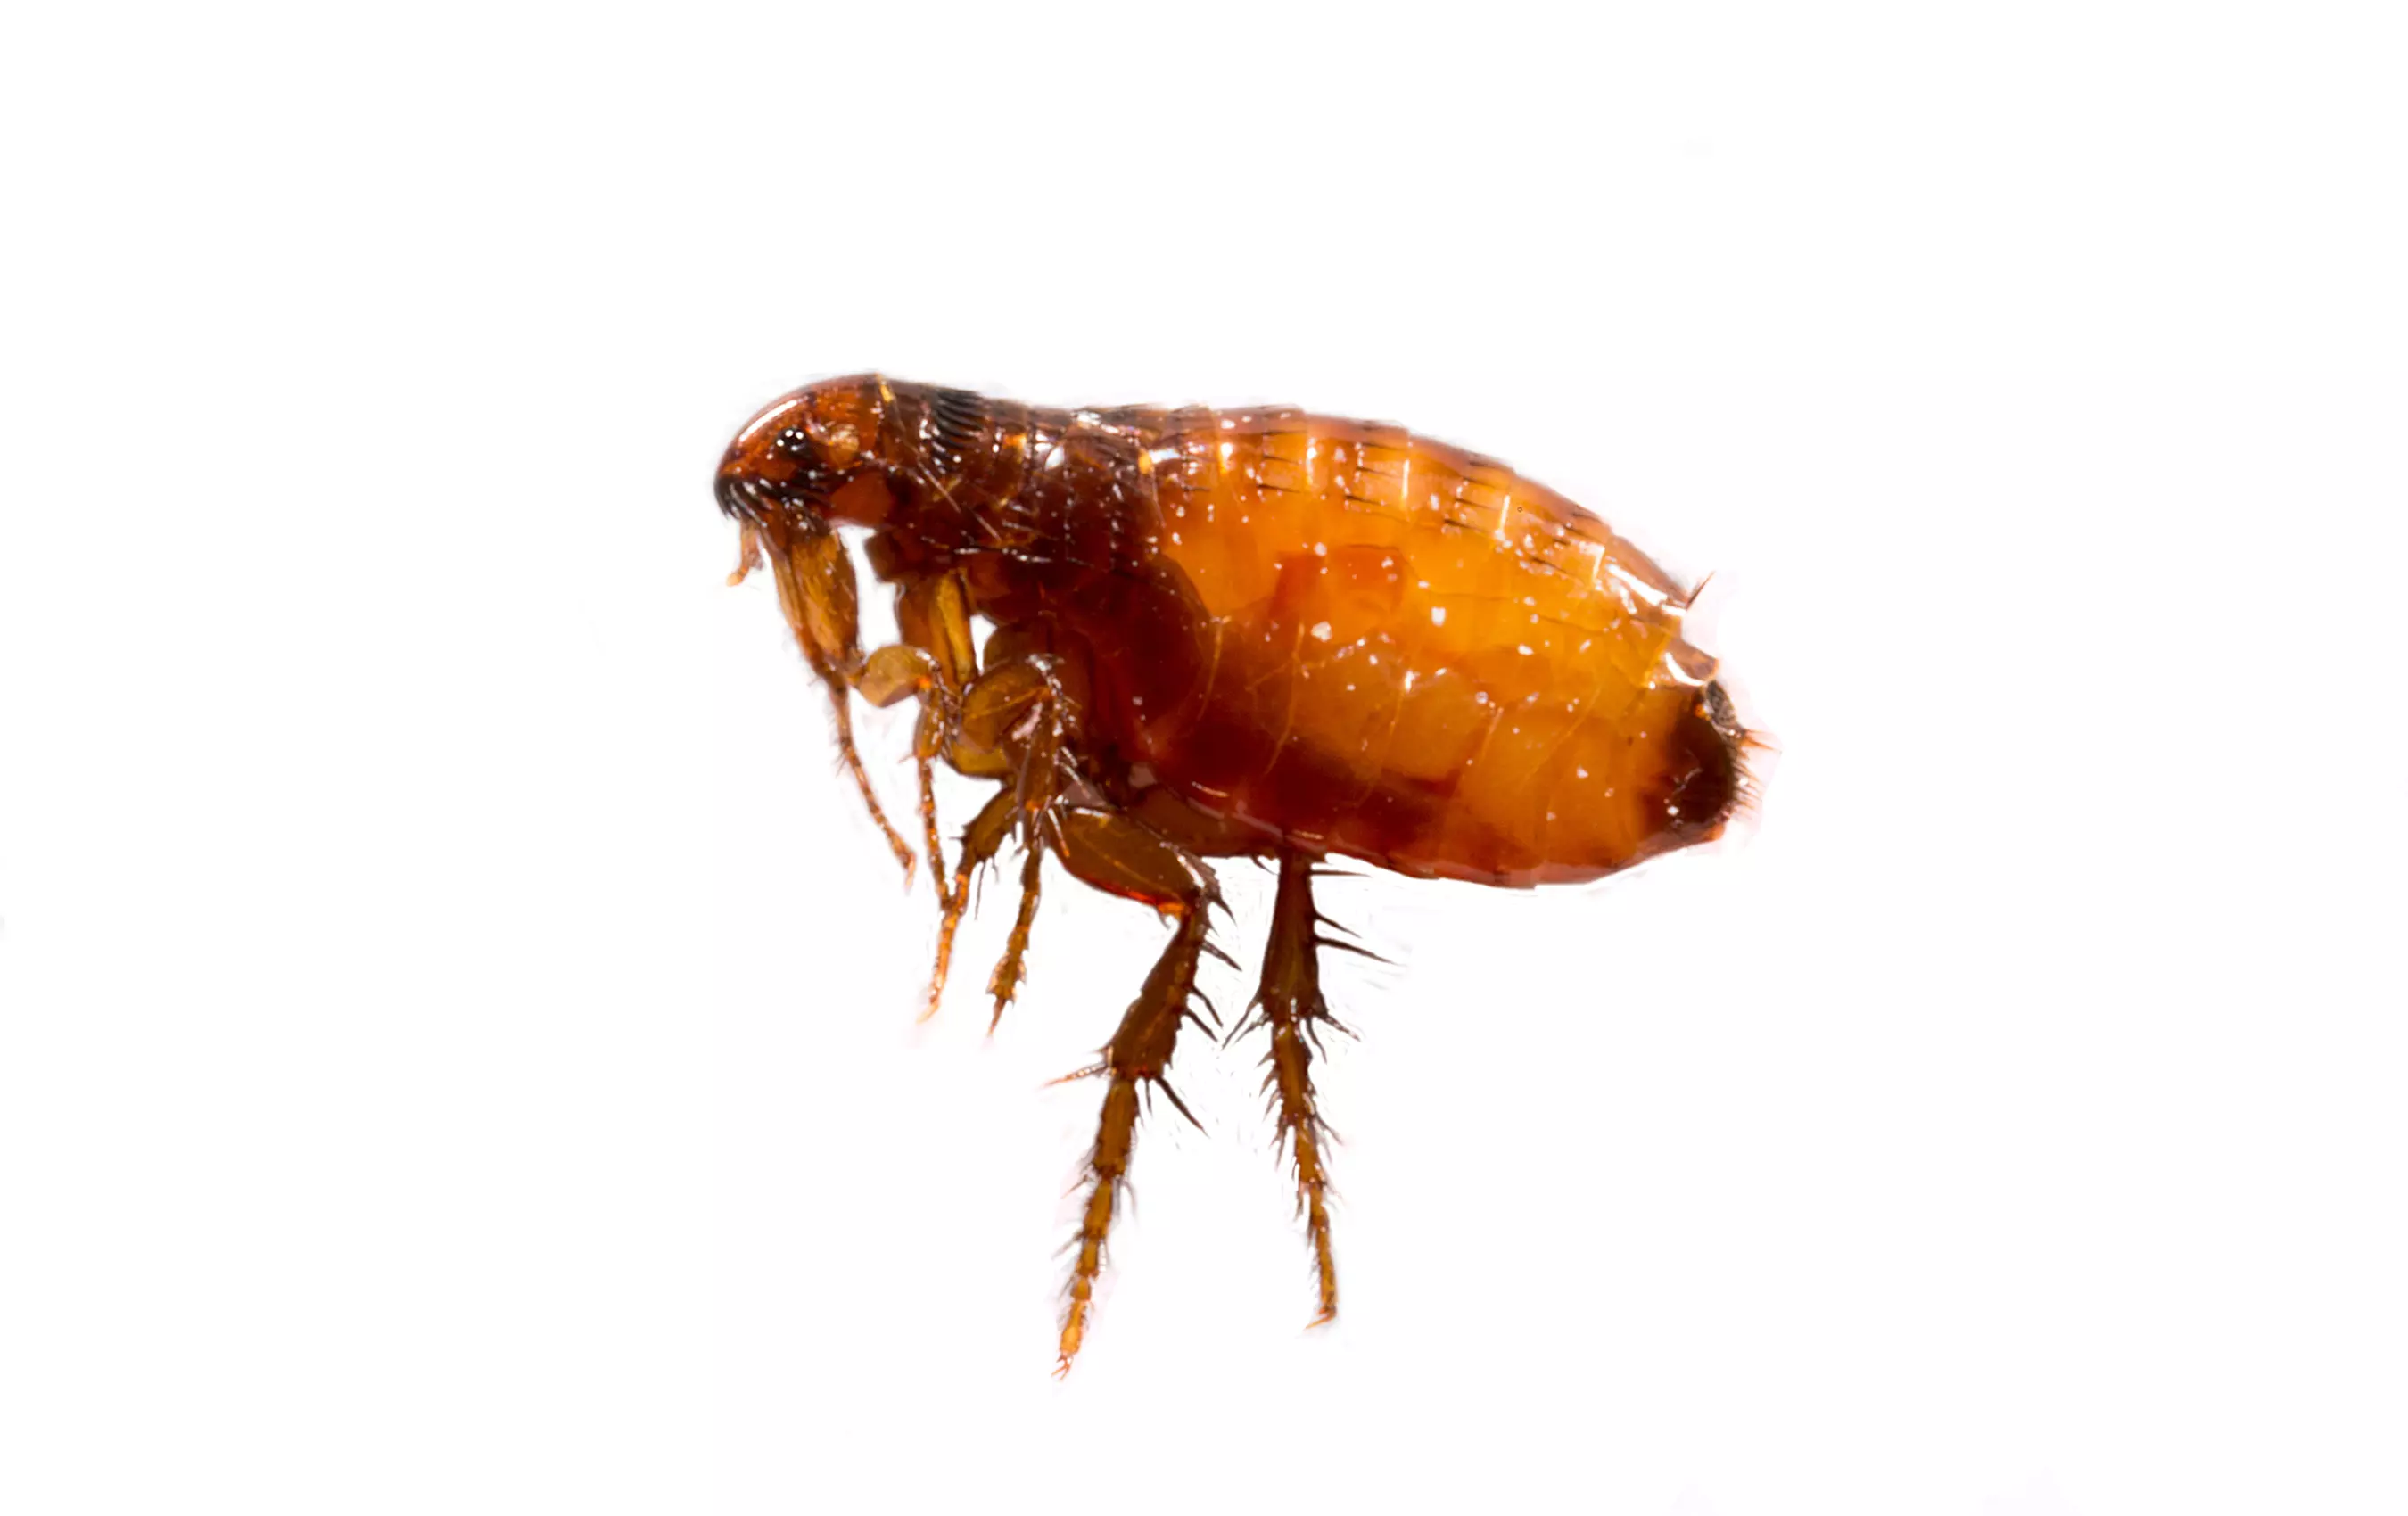 Pest Chase provides flea control